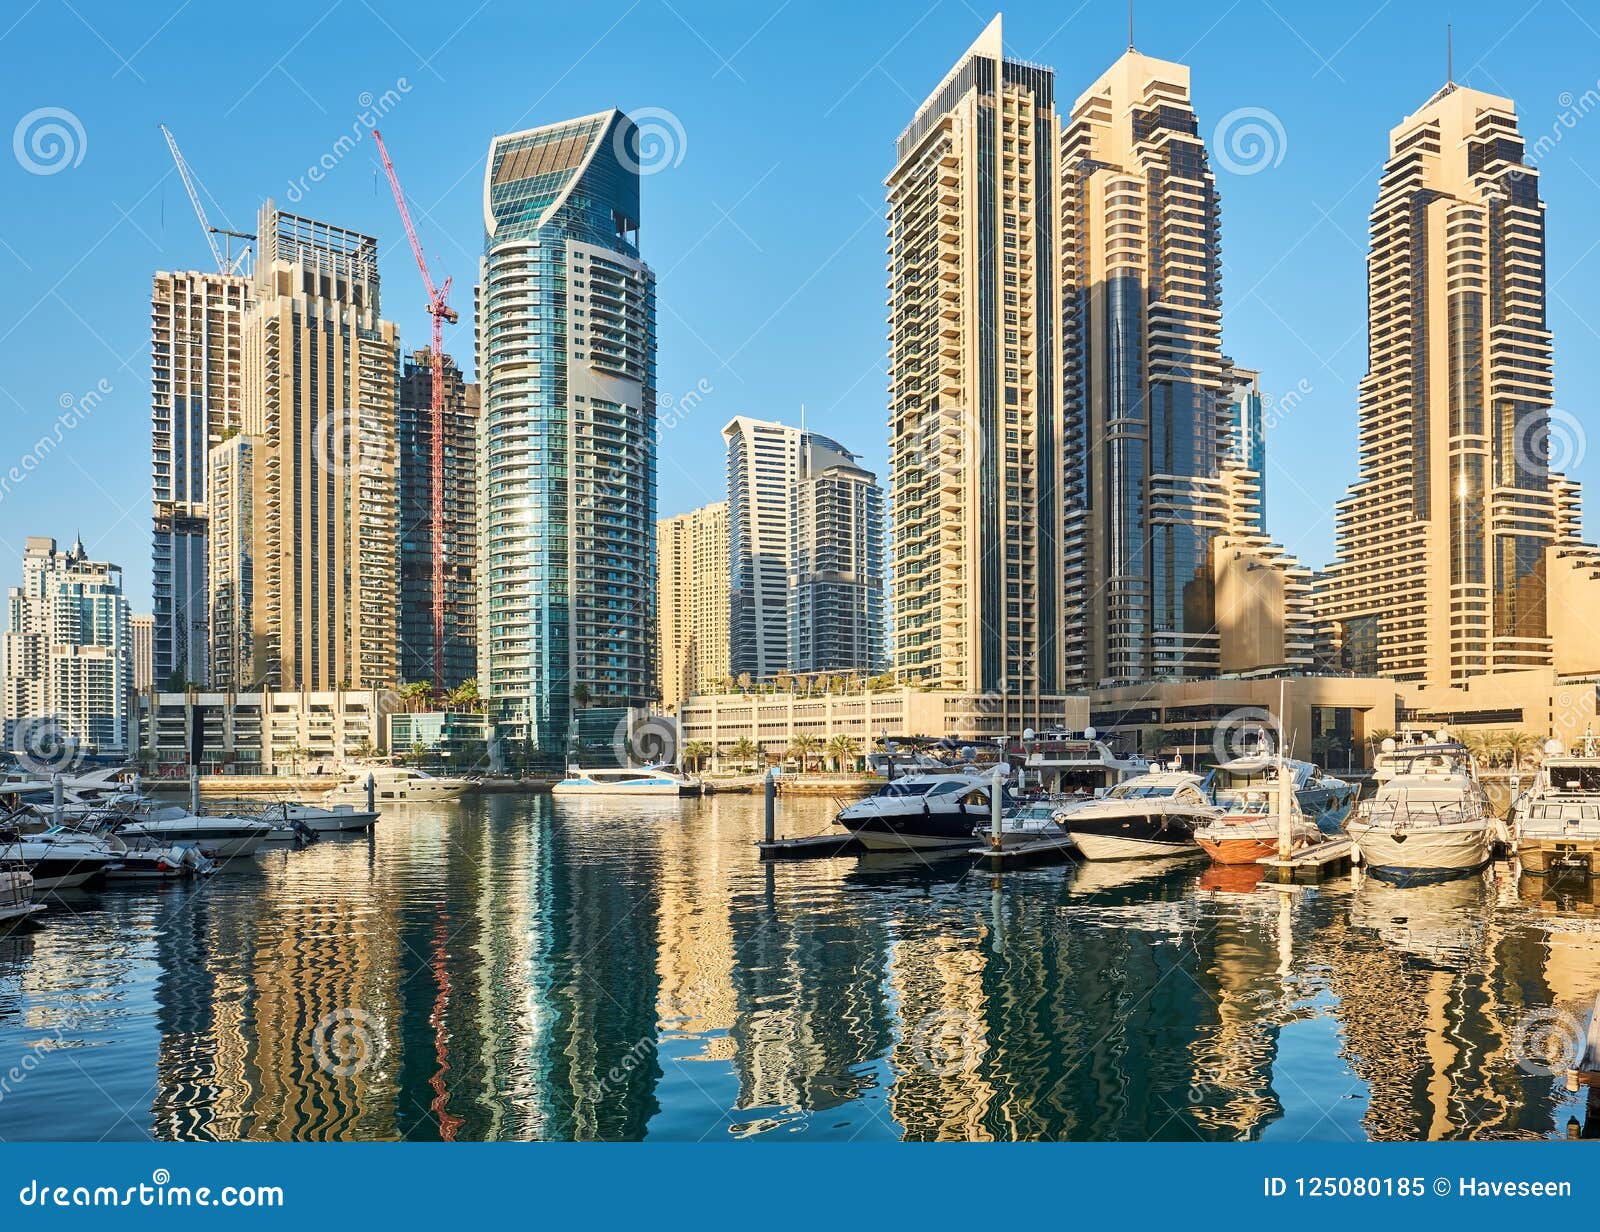 Dubai marina skyline in United Arab Emirates. Dubai marina daytime skyline in United Arab Emirates